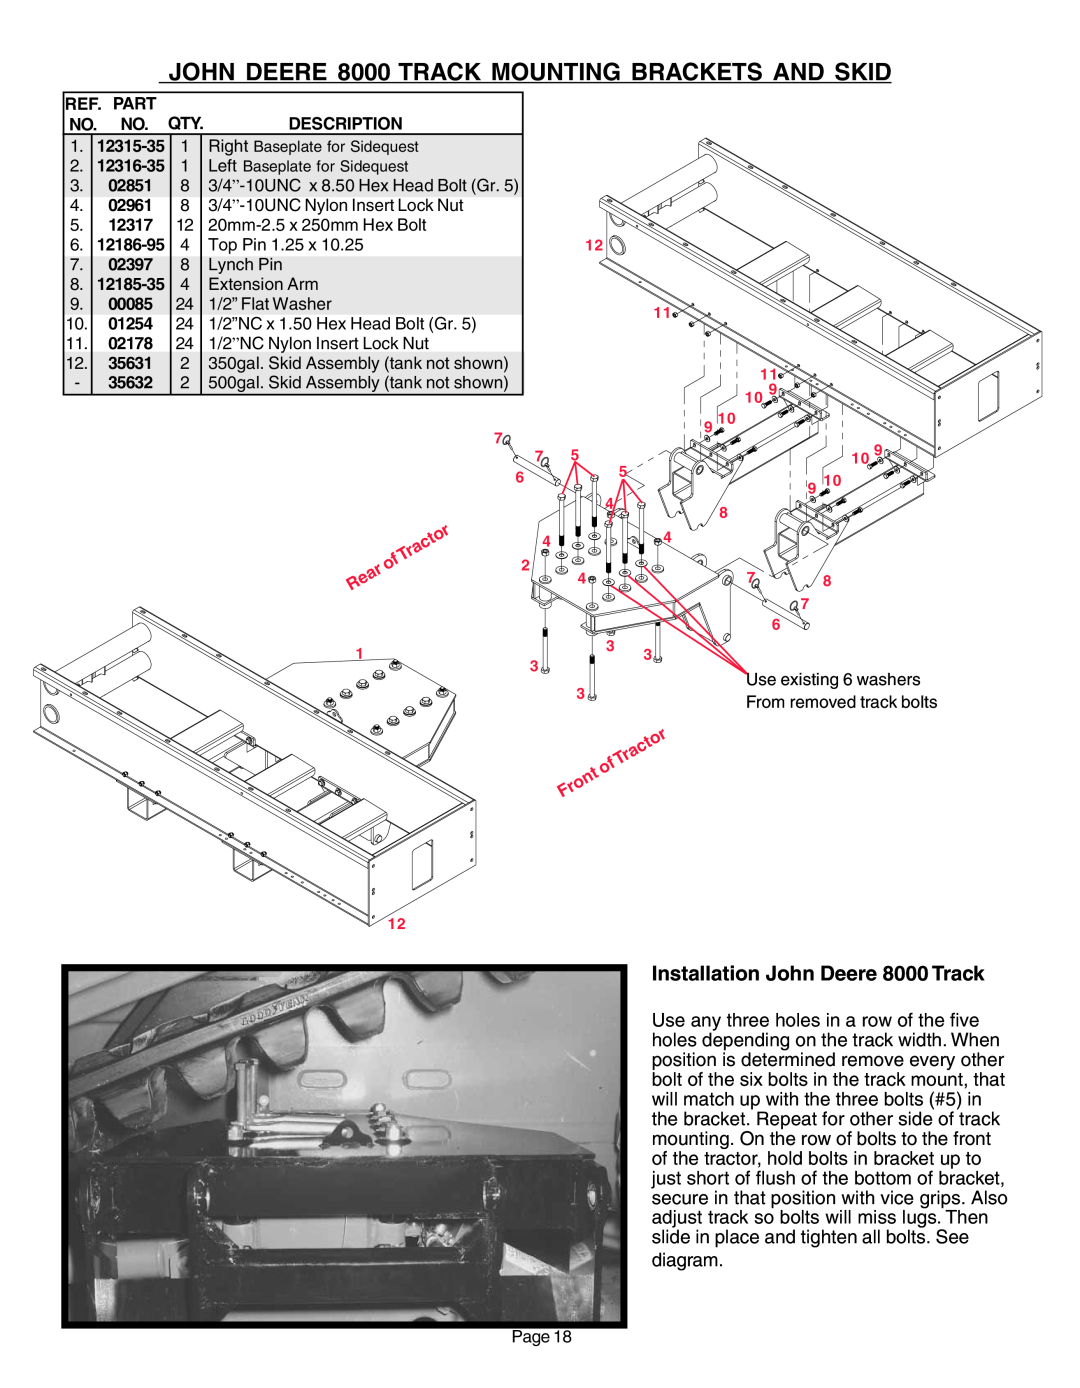 Demco AC20037 manual JOHN DEERE 8000 TRACK MOUNTING BRACKETS AND SKID, Installation John Deere 8000 Track 